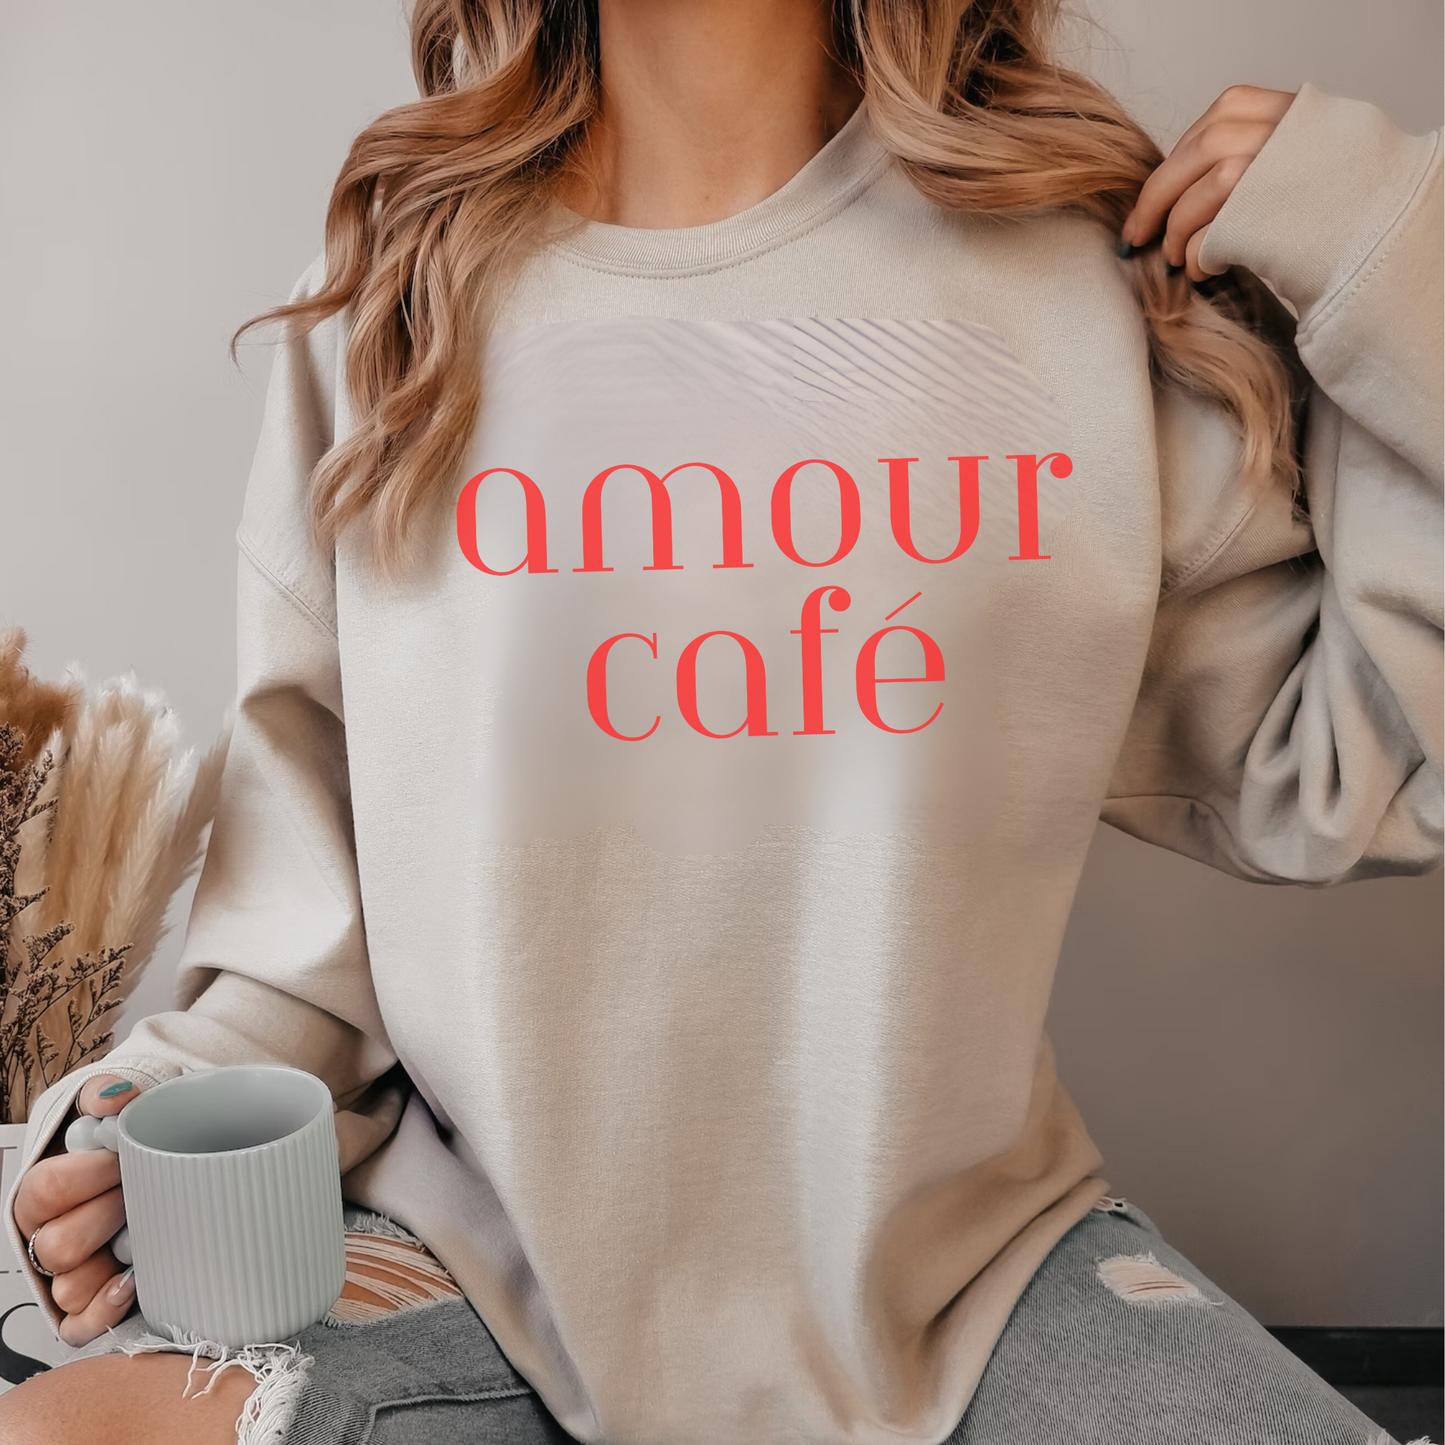 Amour Cafe Crewneck Sweatshirt